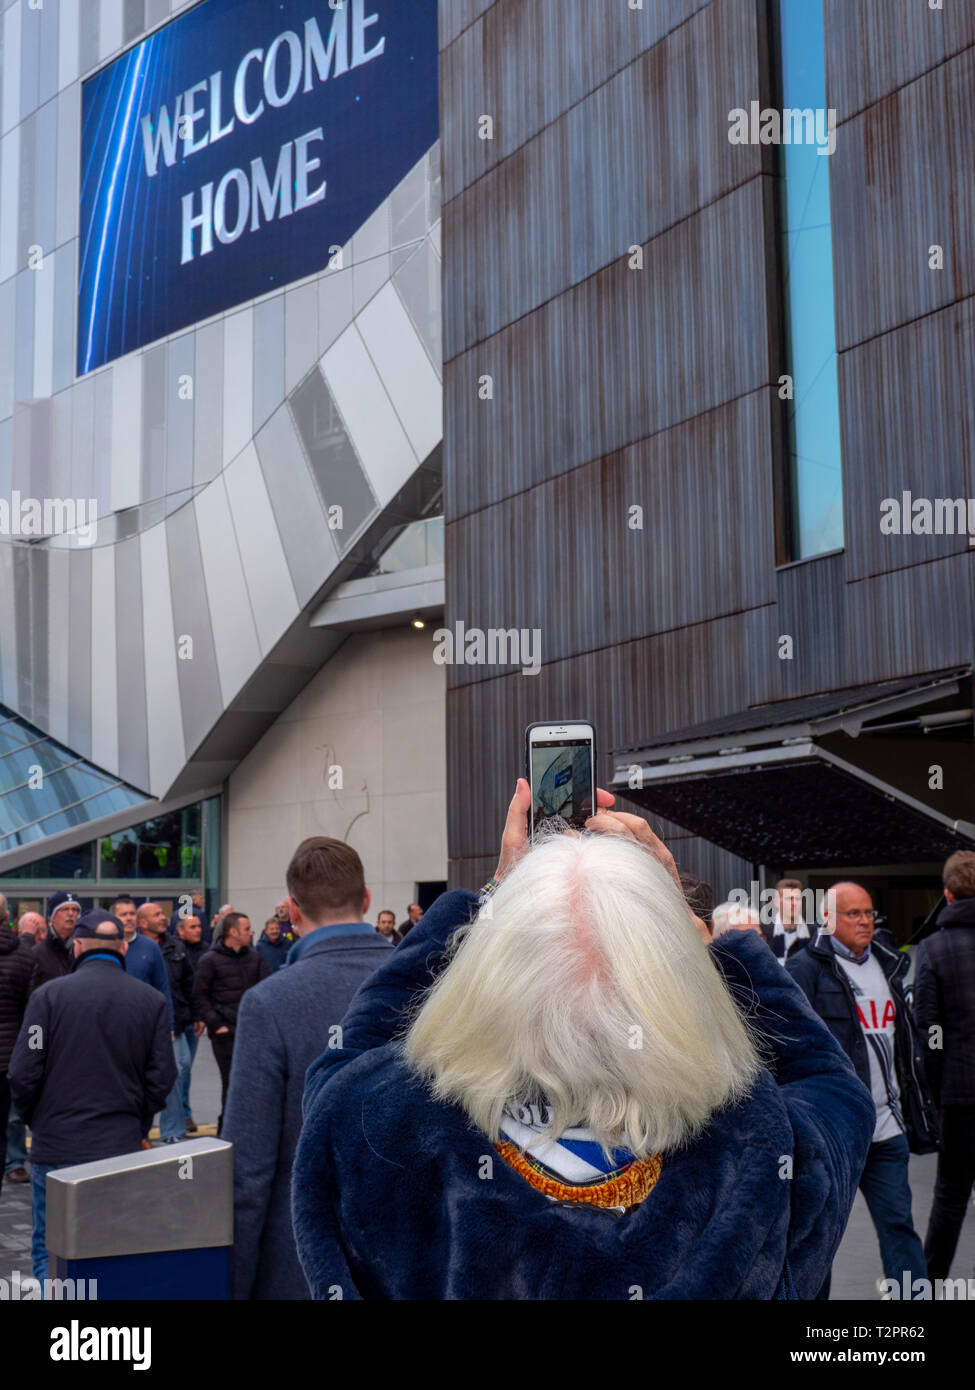 Tottenham Hotspur fans arriva per la prima partita al nuovo stadio. Foto Stock